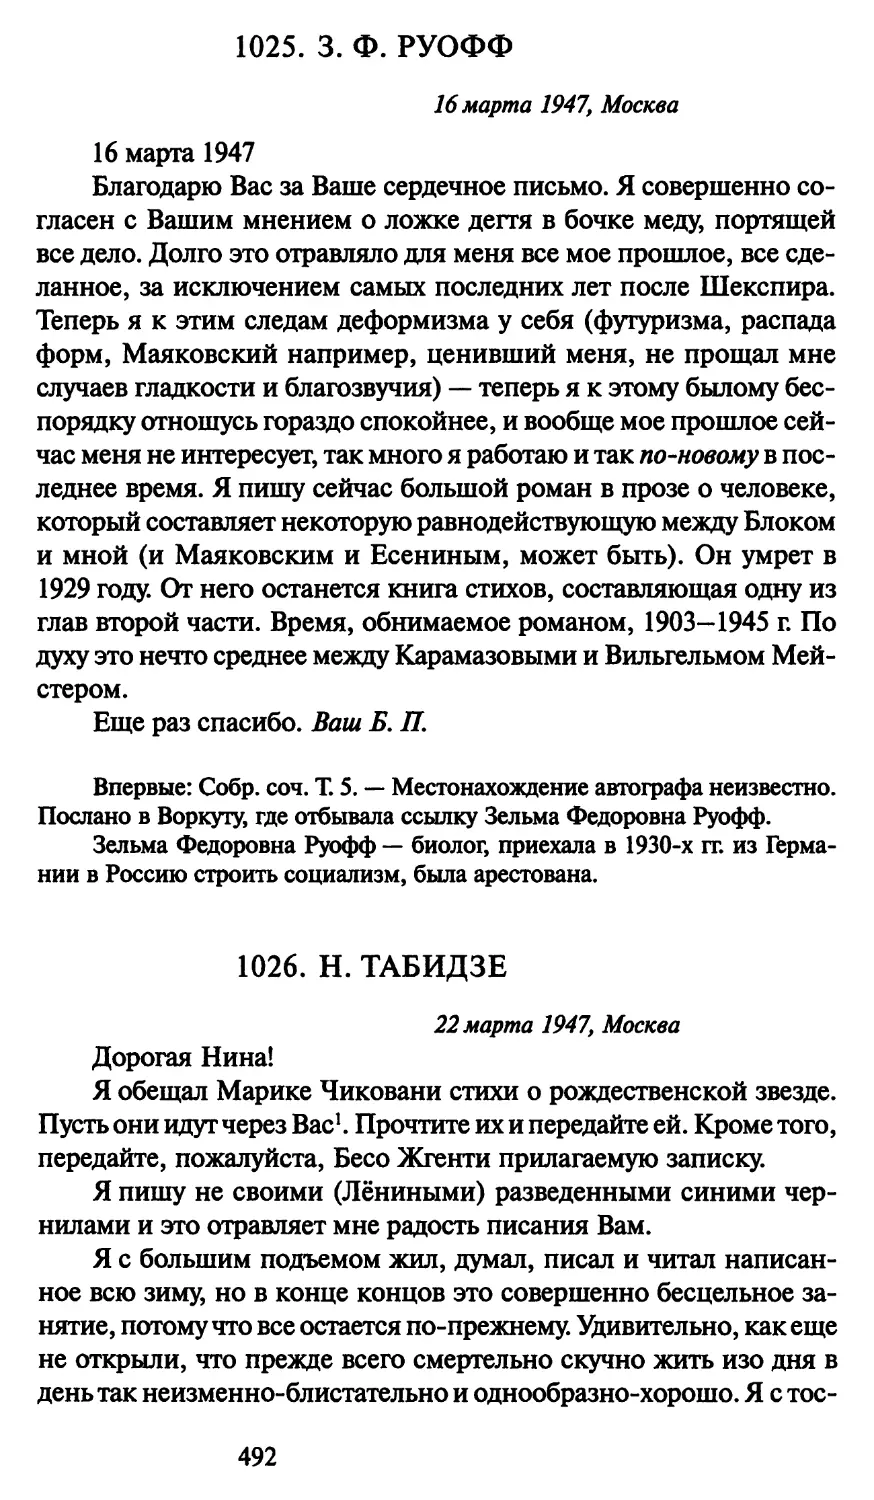 1026. Н. Табидзе 22 марта 1947